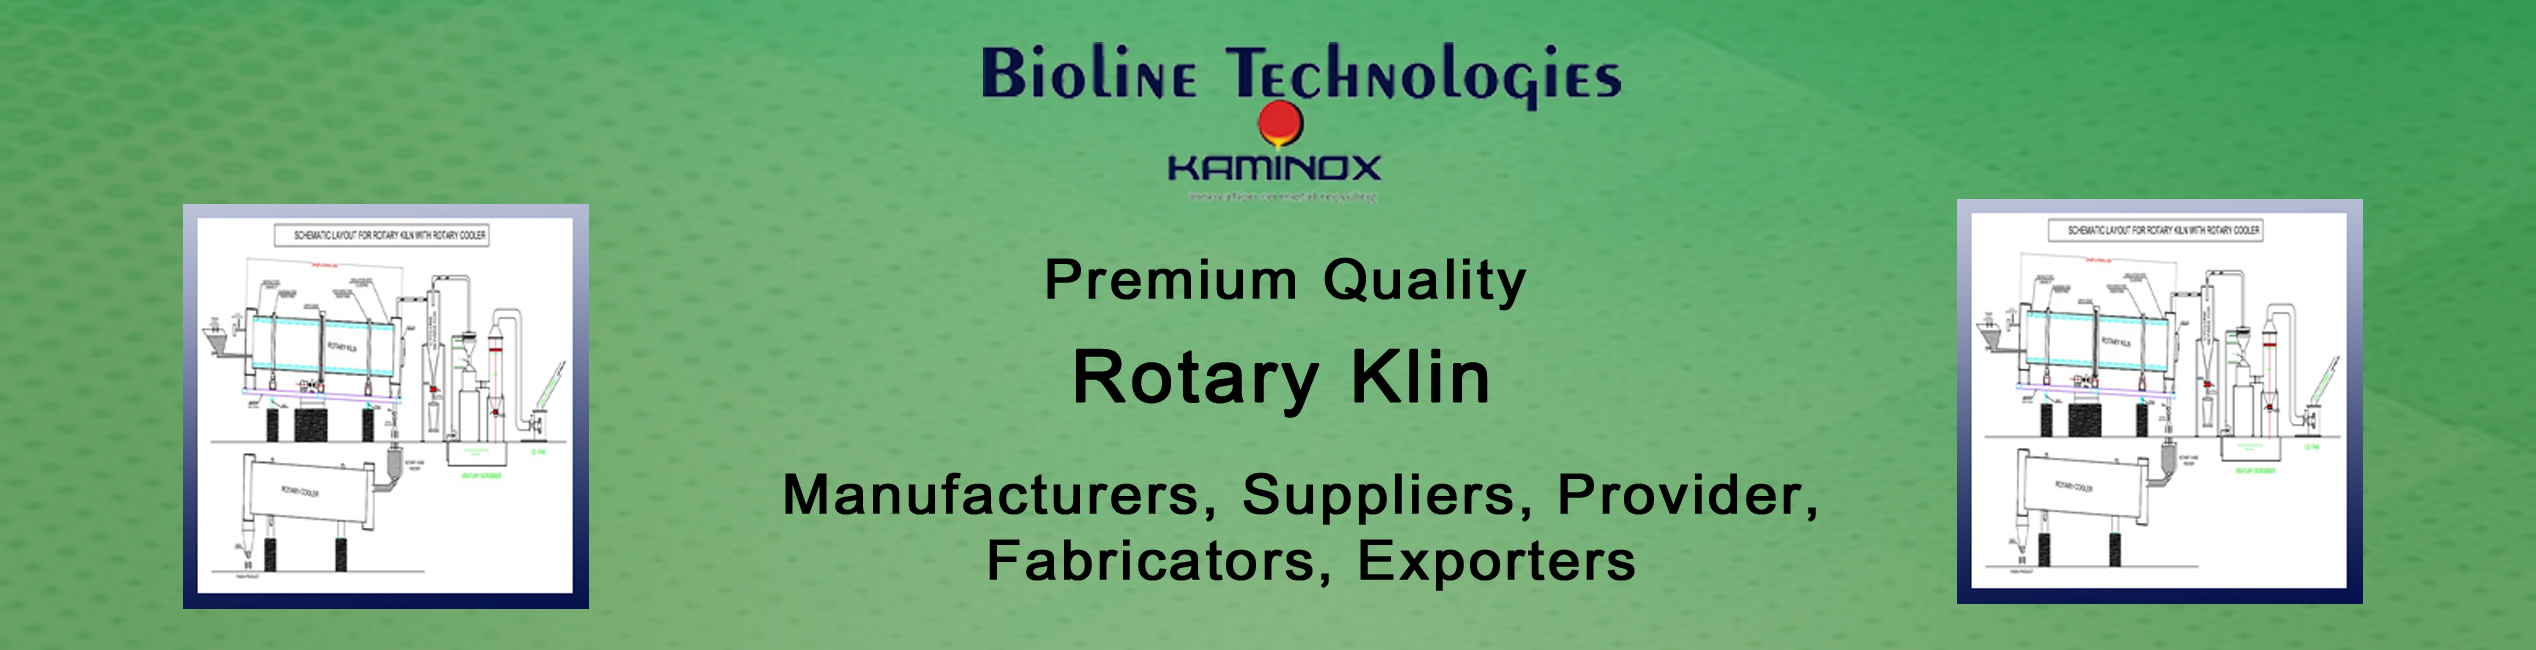 Bioline Technologies